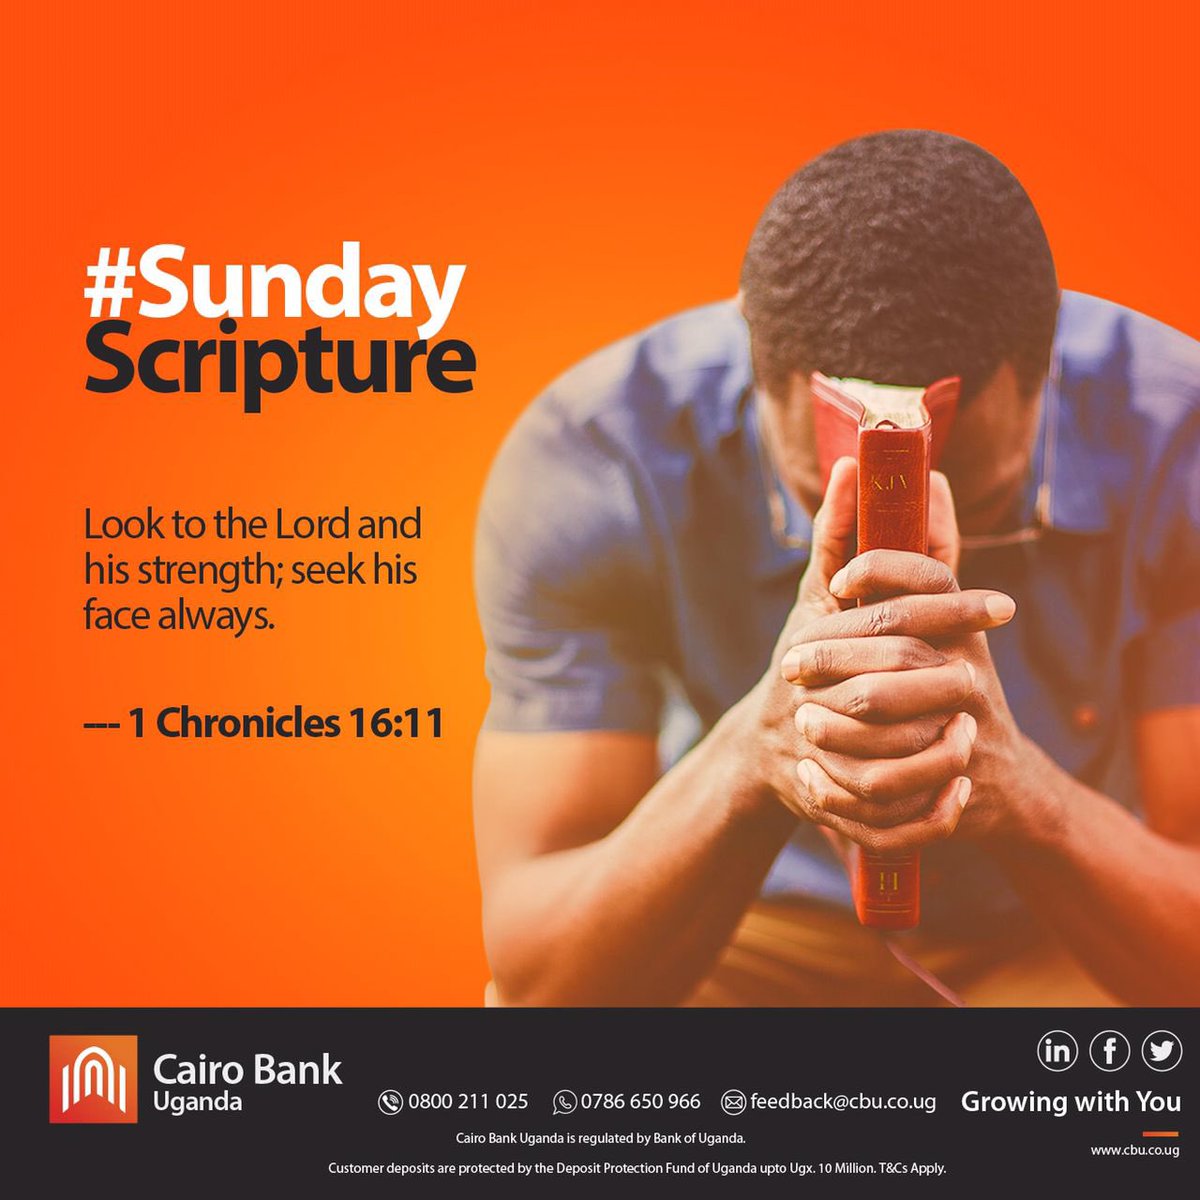 #SundayScripture 

#CairoBank #SundayService #SundayPrayer